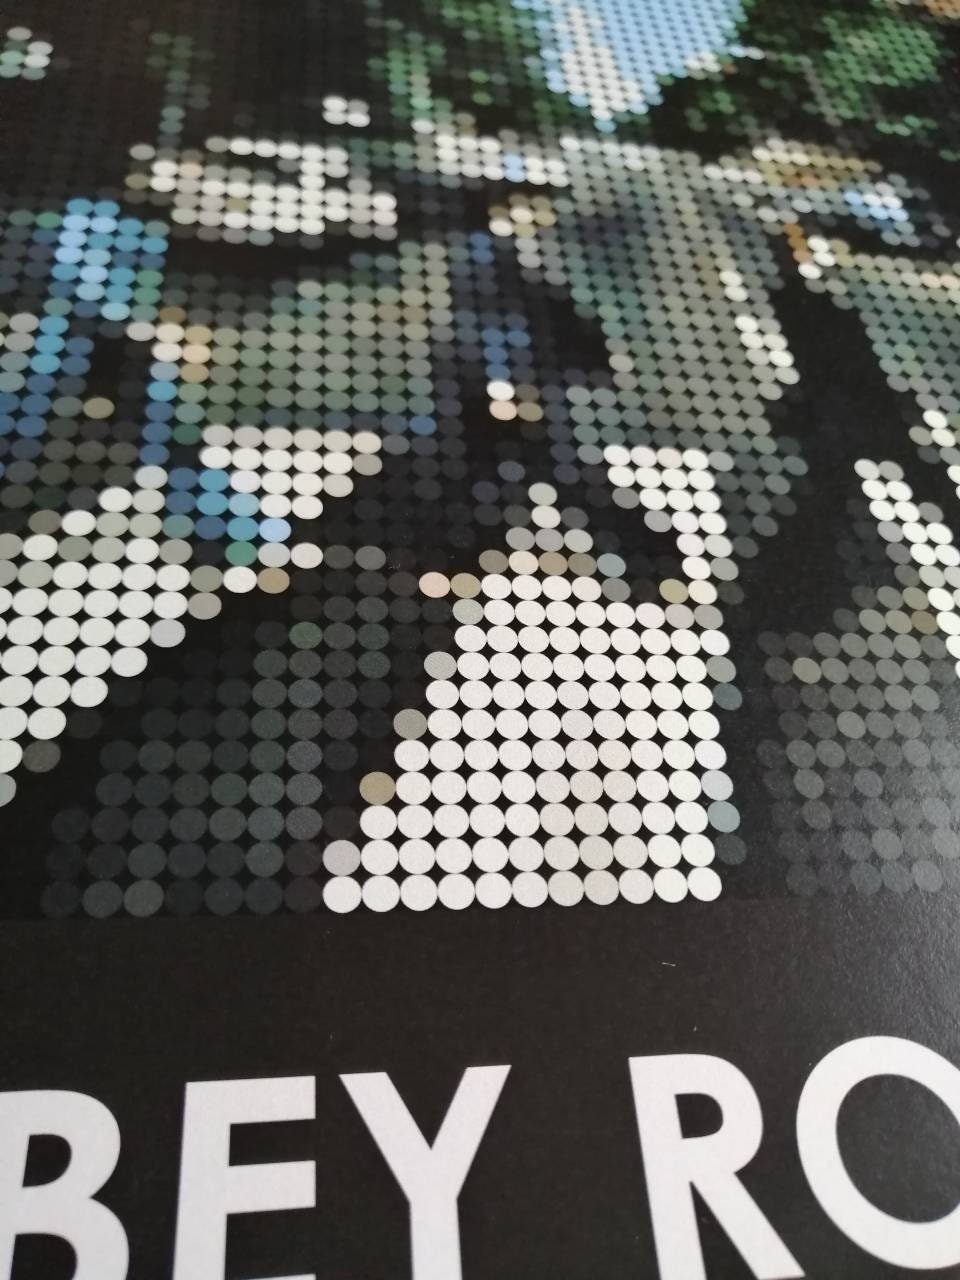 The Beatles Abbey Road Album Cover Pixel Dot Poster